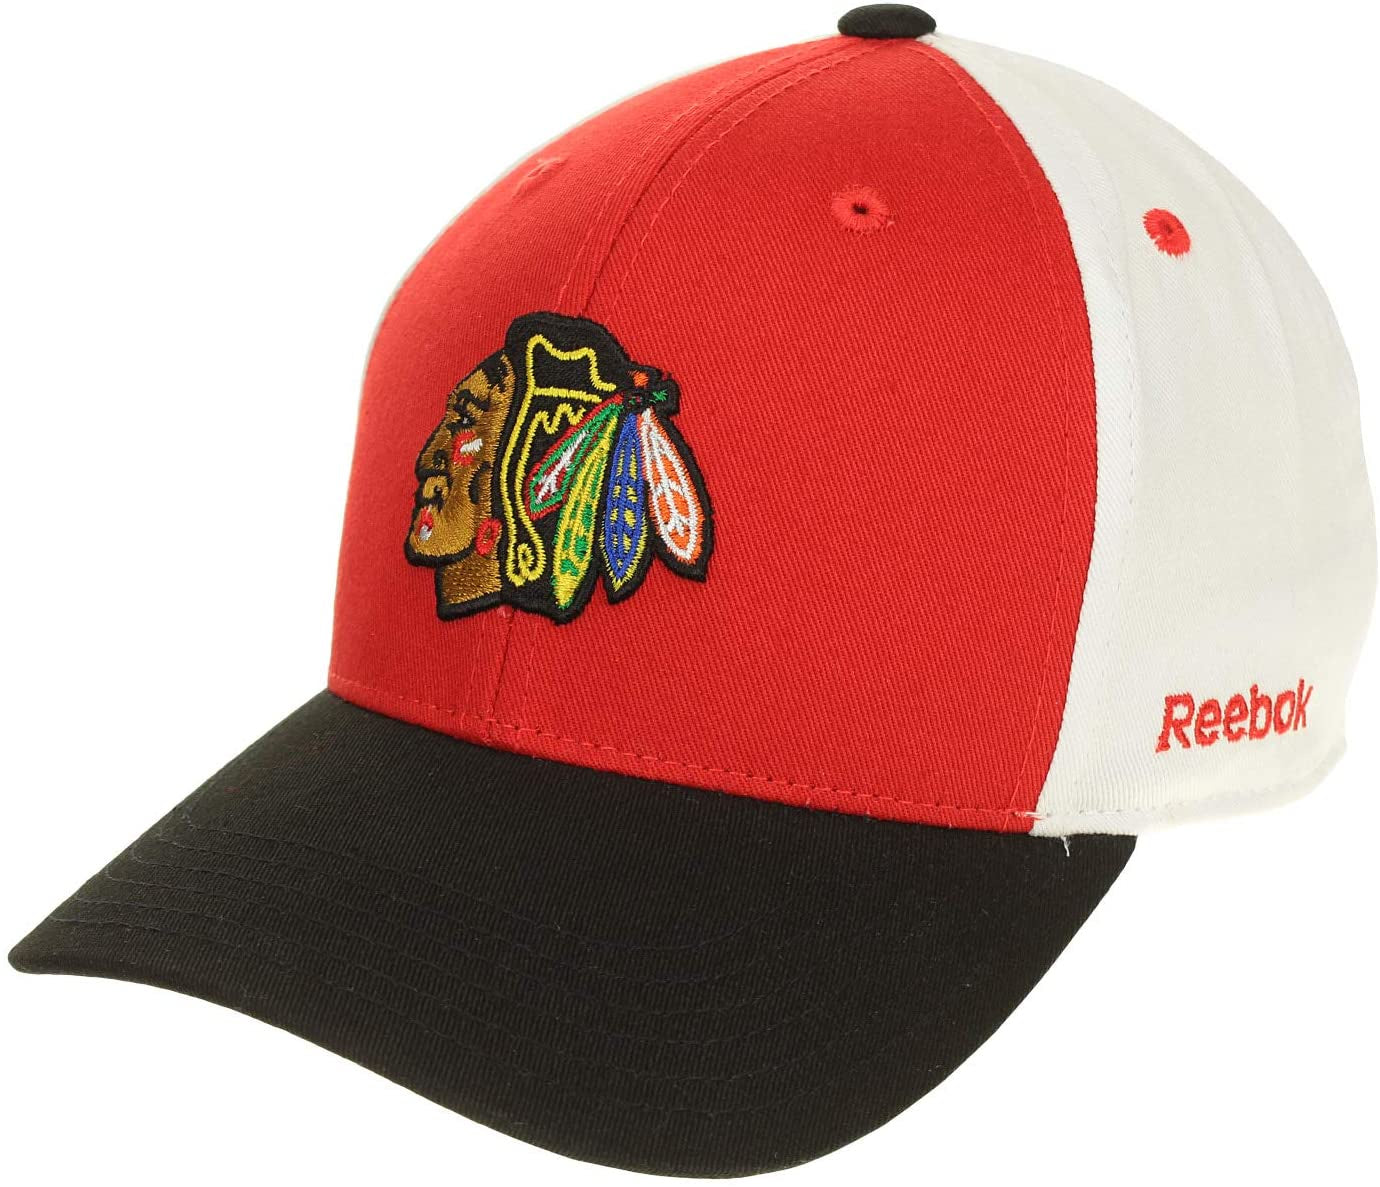 Reebok NHL Kids 4-7 Chicago Blackhawks Colorblock Cap